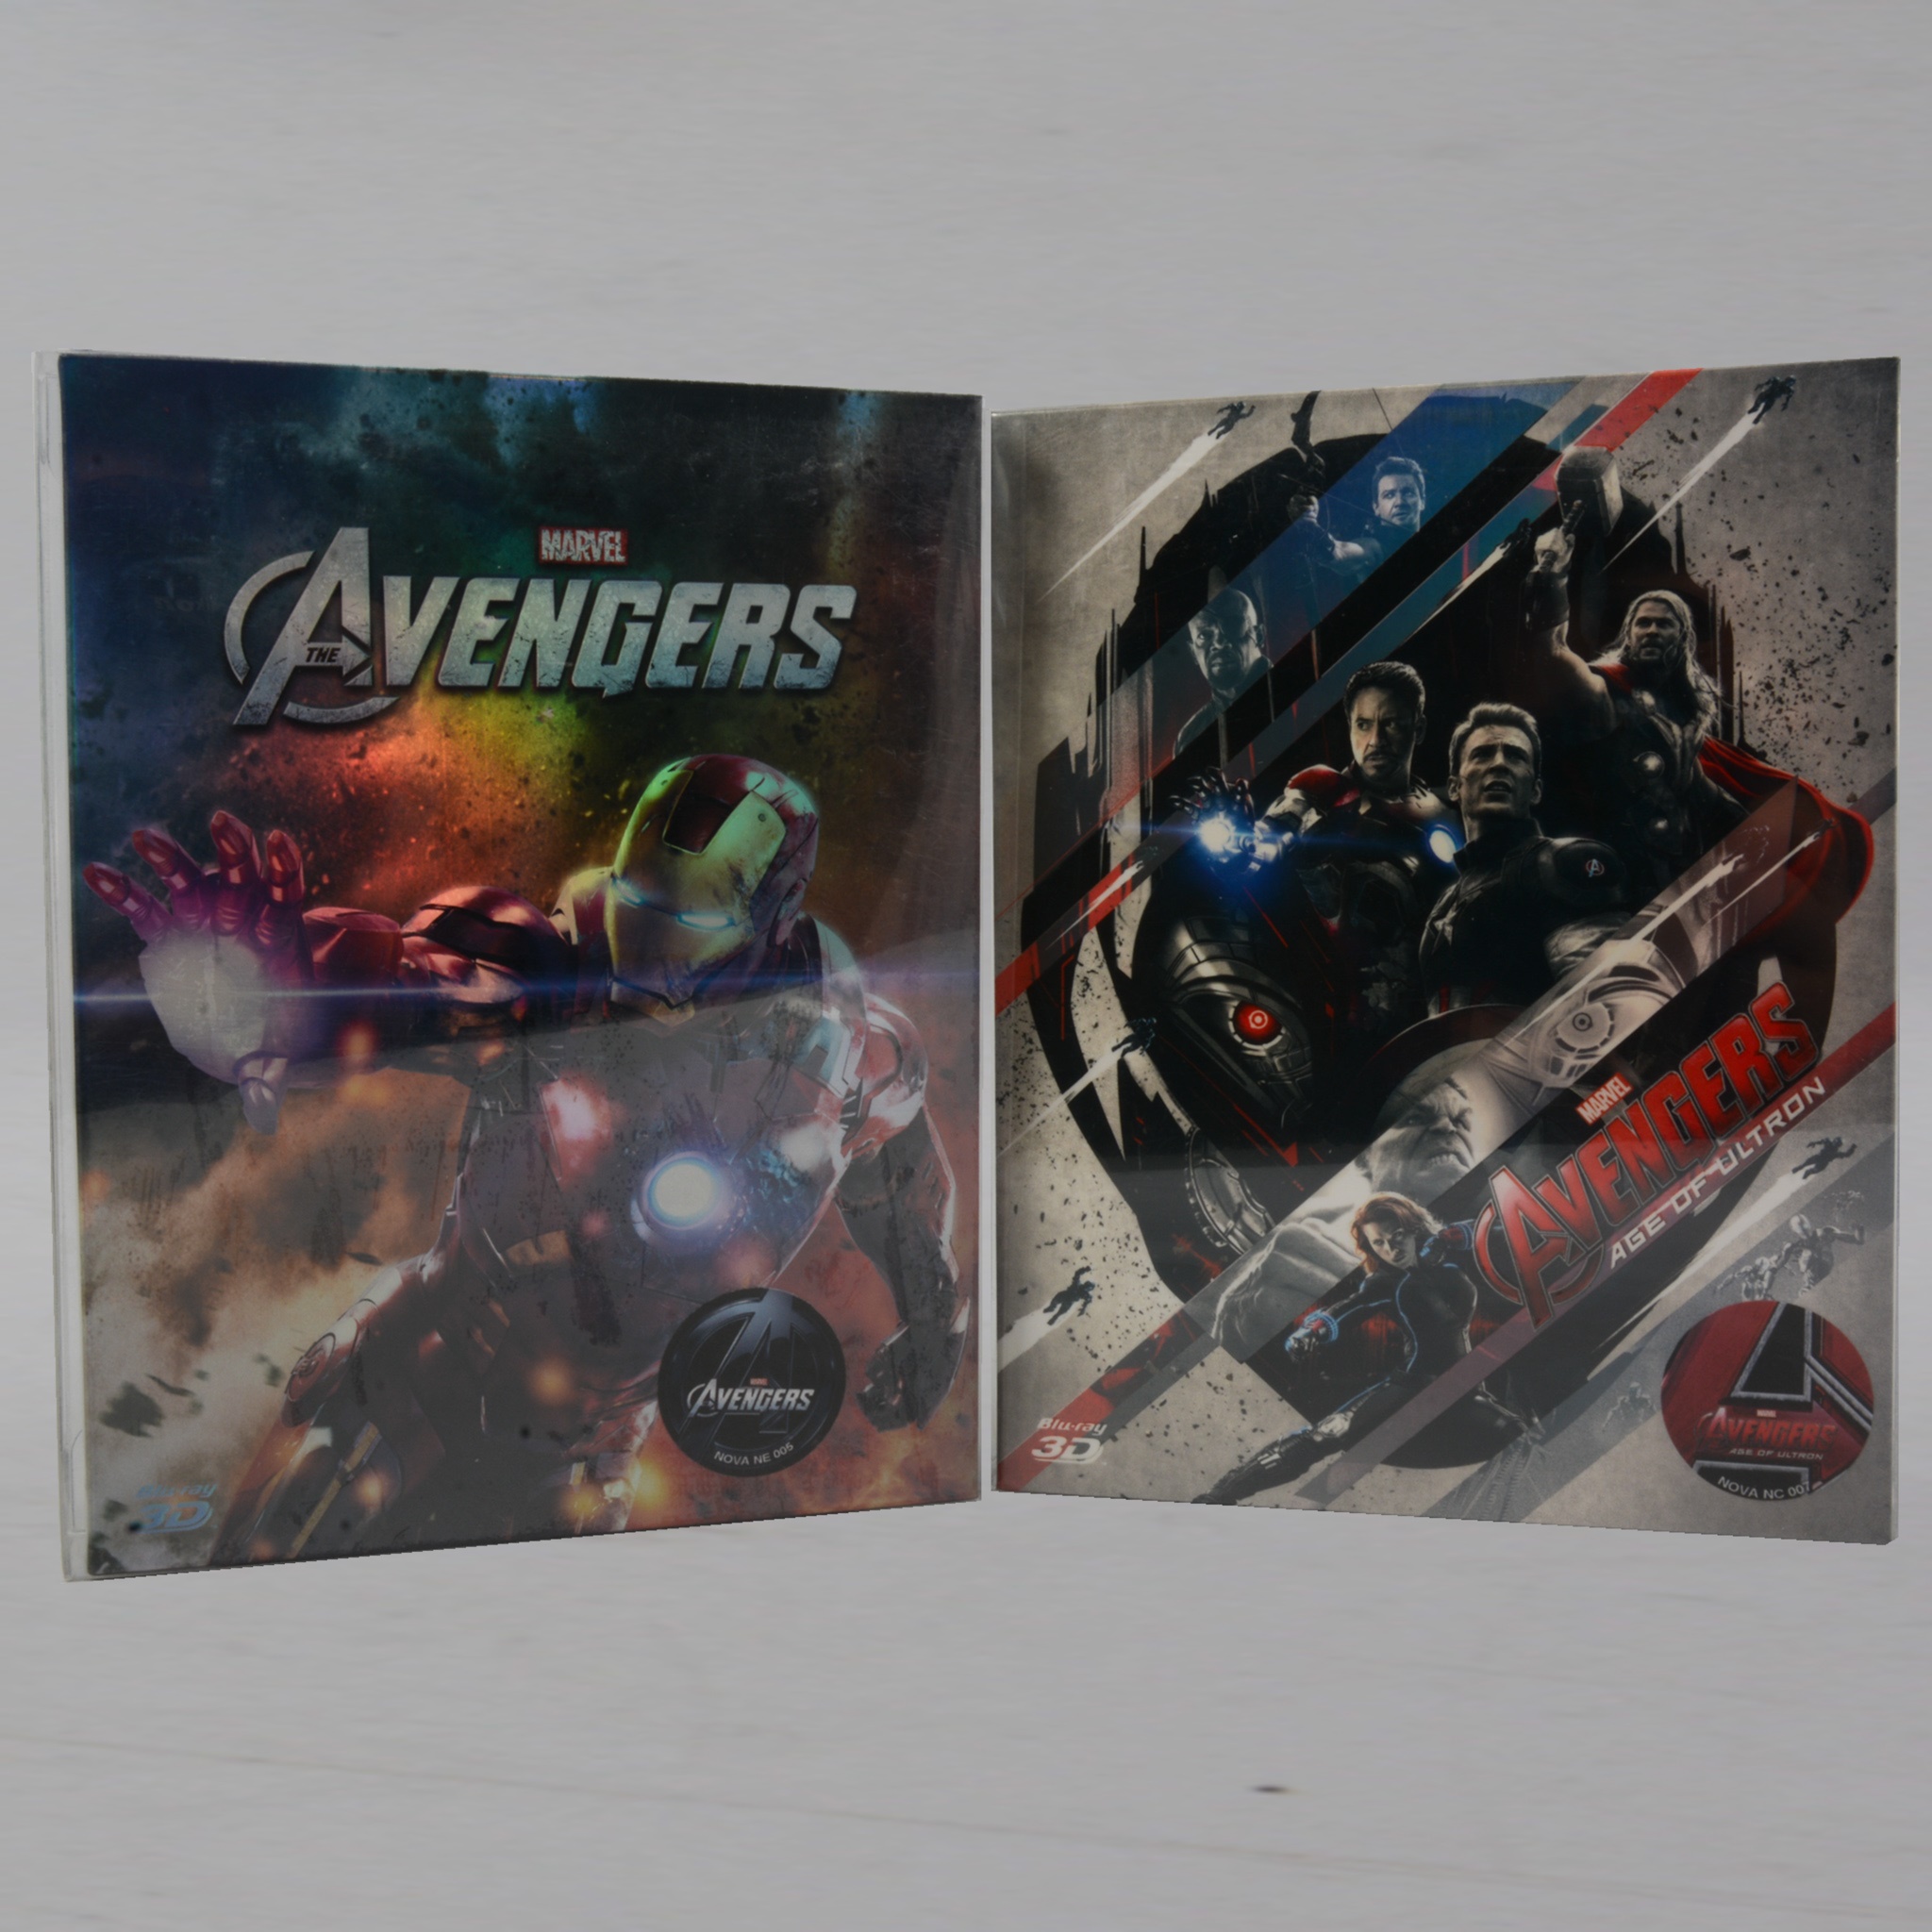 The Avengers Nova Media Steelbook Lenticular 3D Blu-rays.